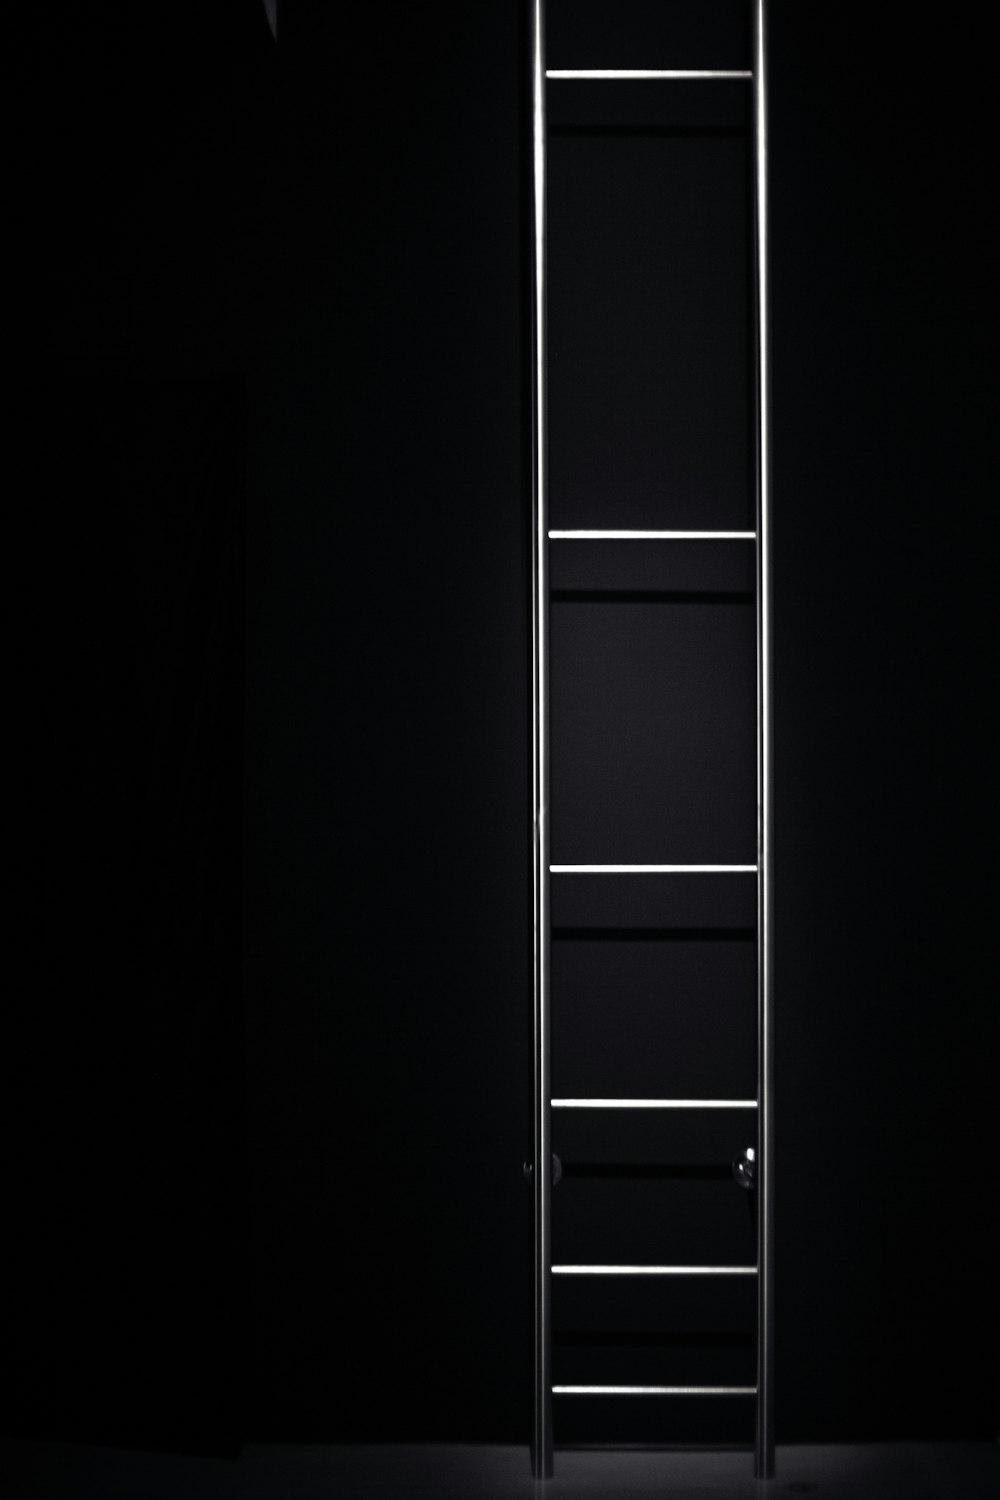 a ladder is lit up in the dark